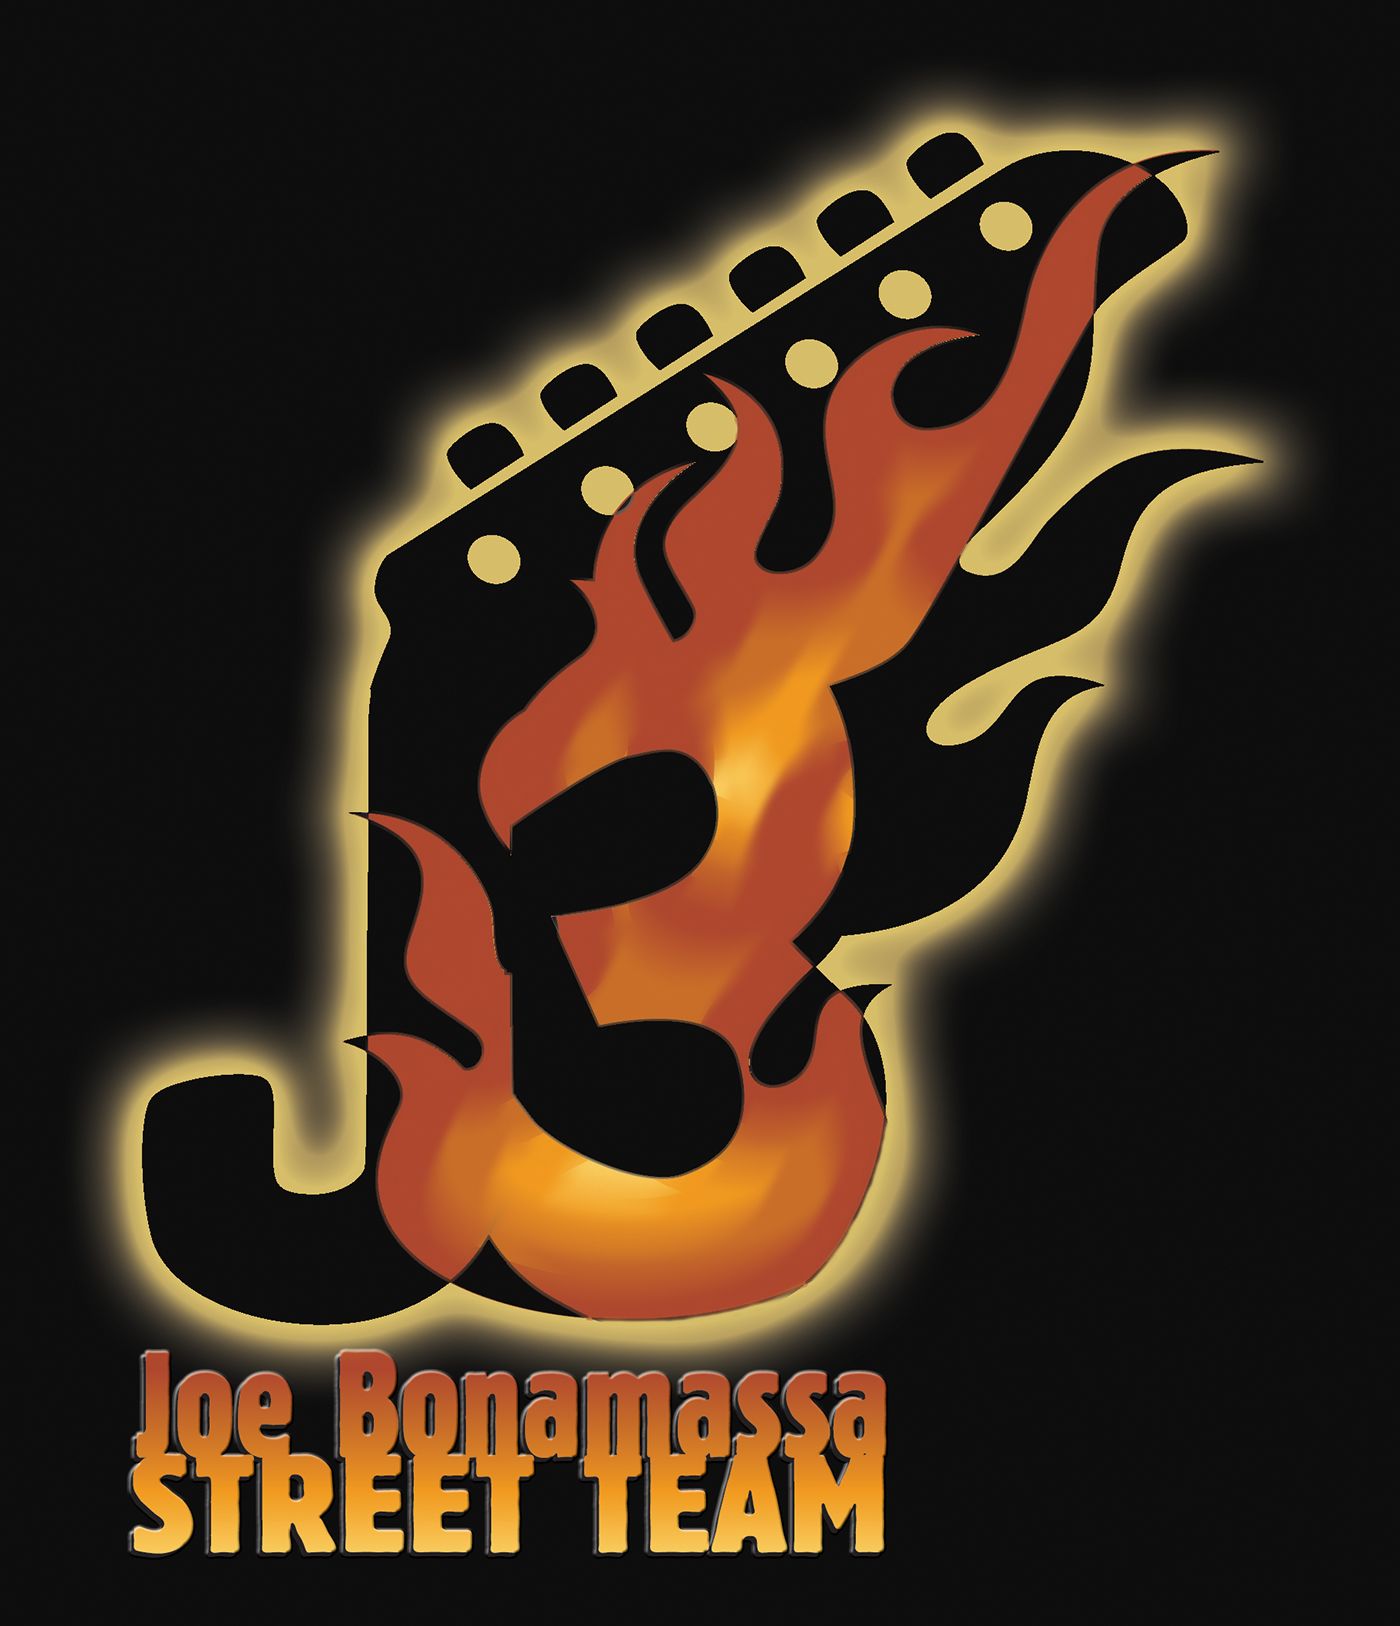 Joe Bonamassa Street Team Logo